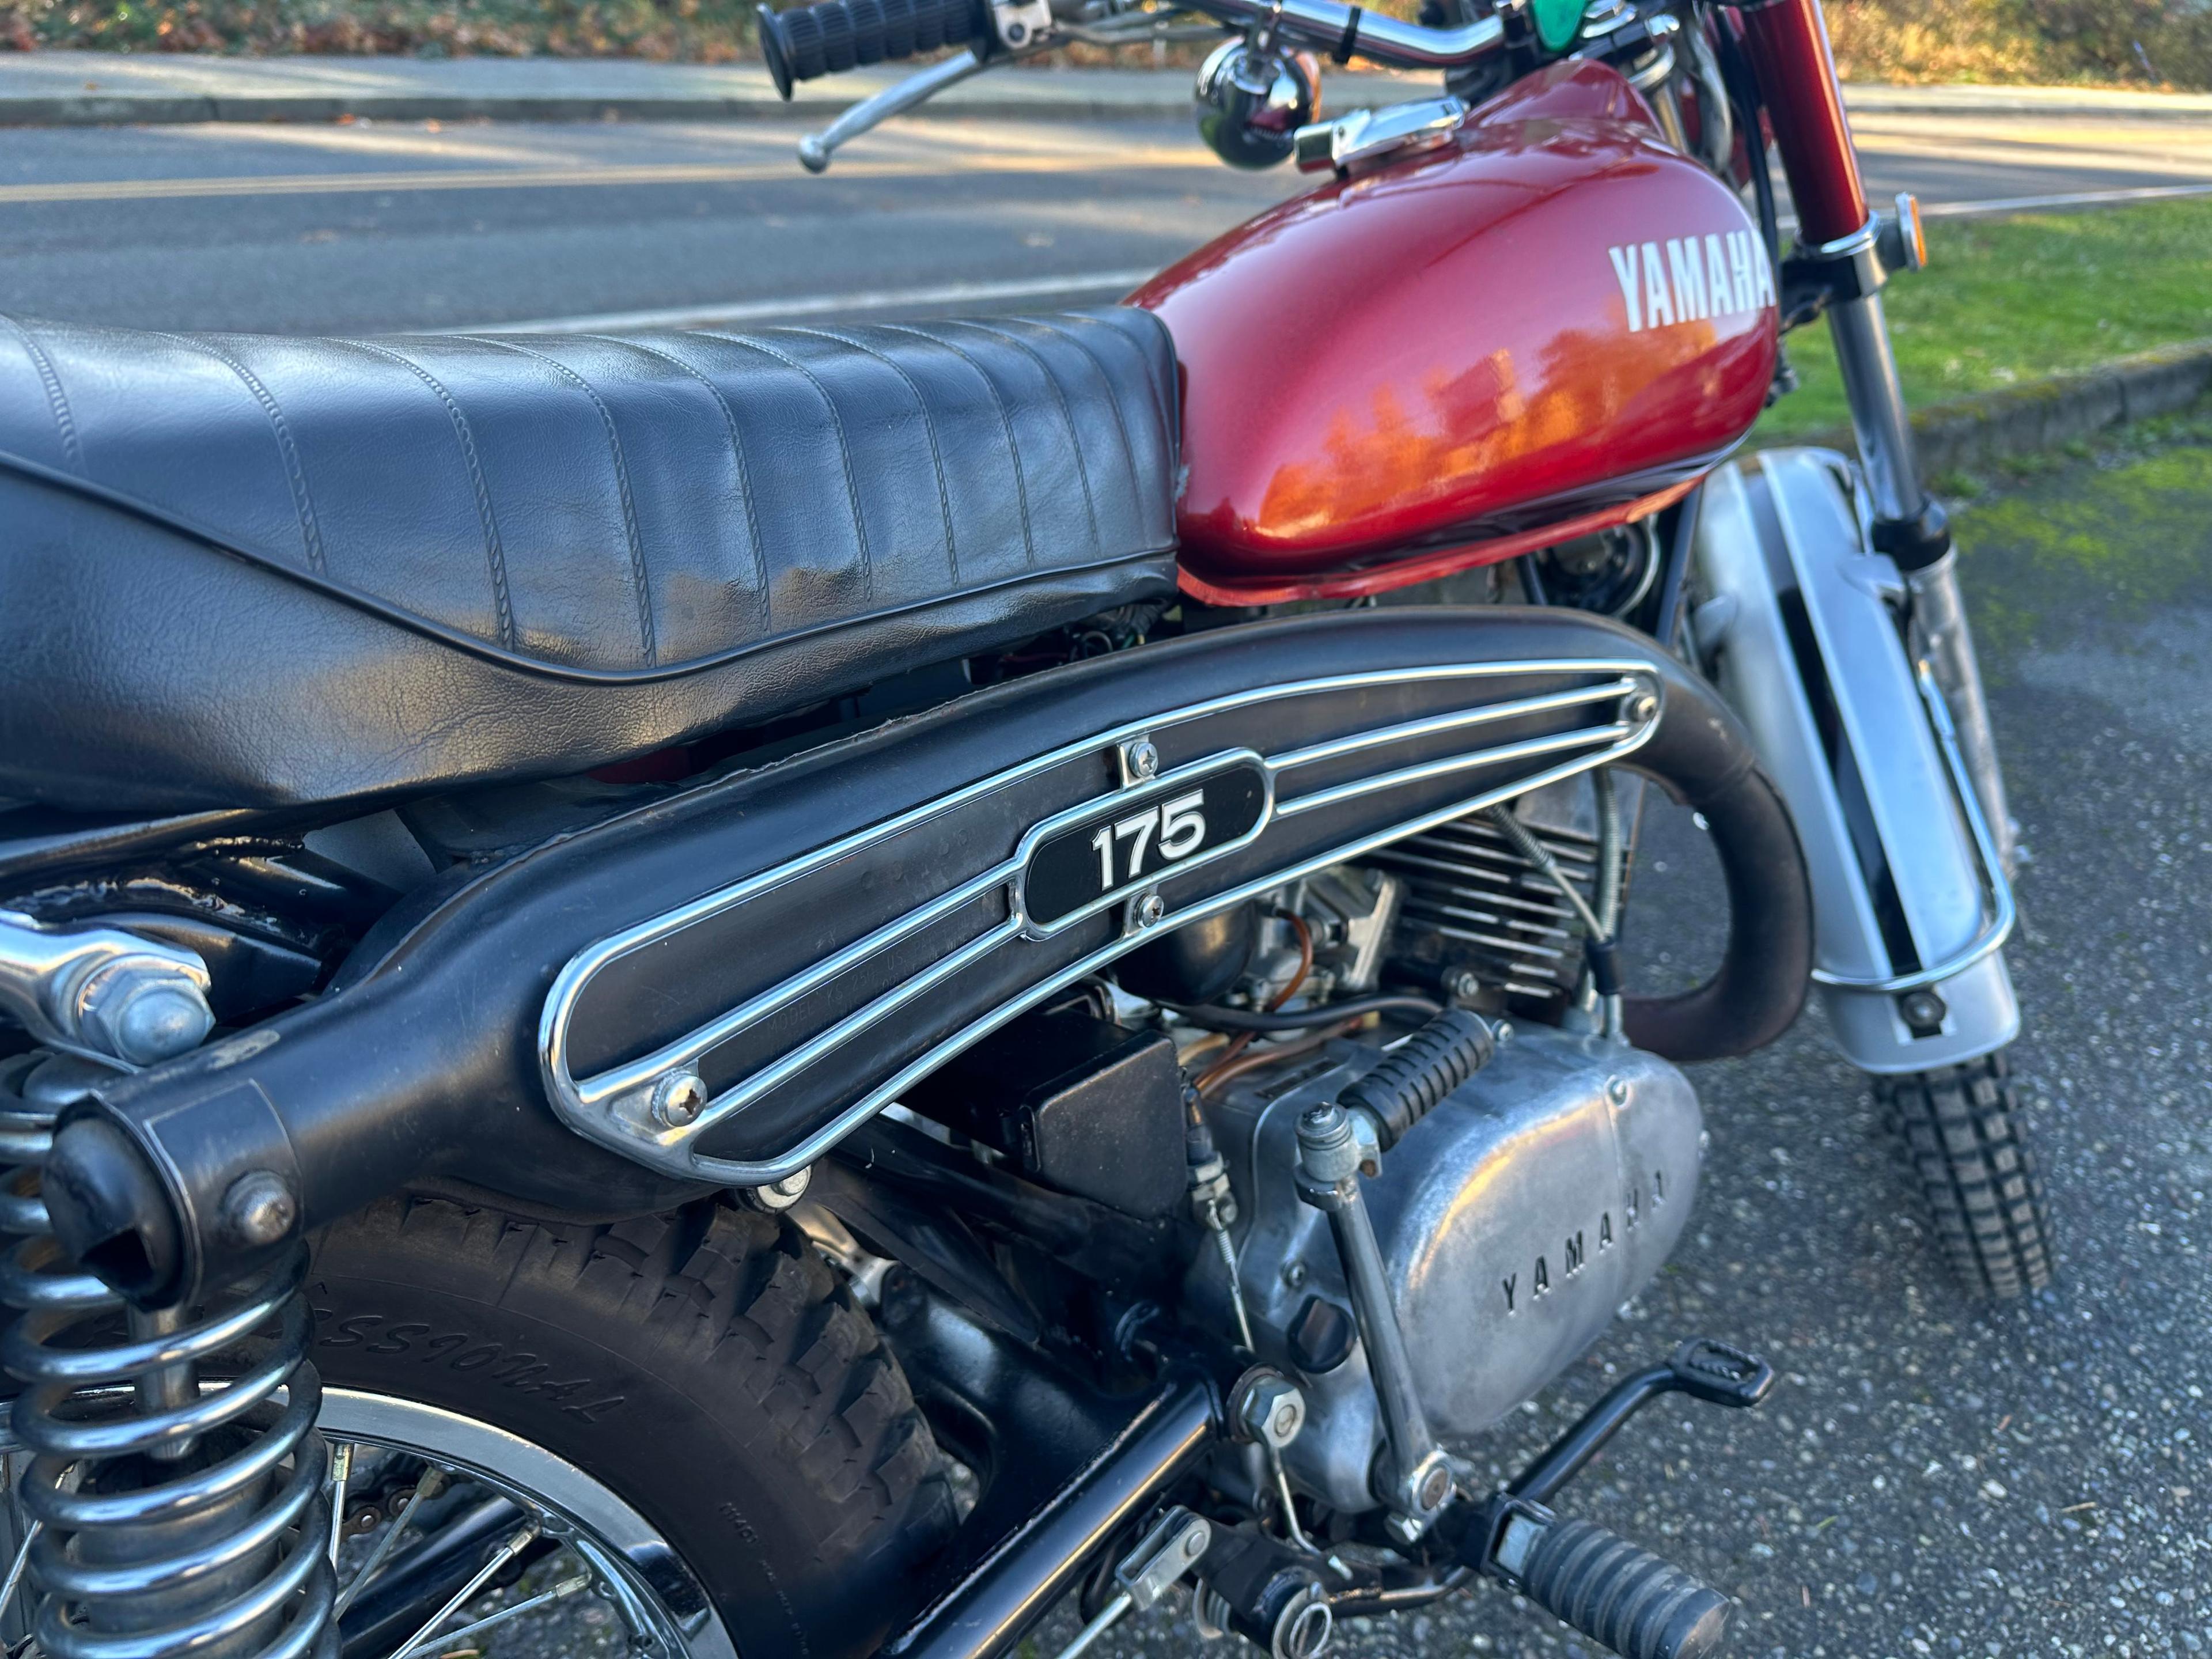 1973 Yamaha CT3 Enduro 175 Motorcycle